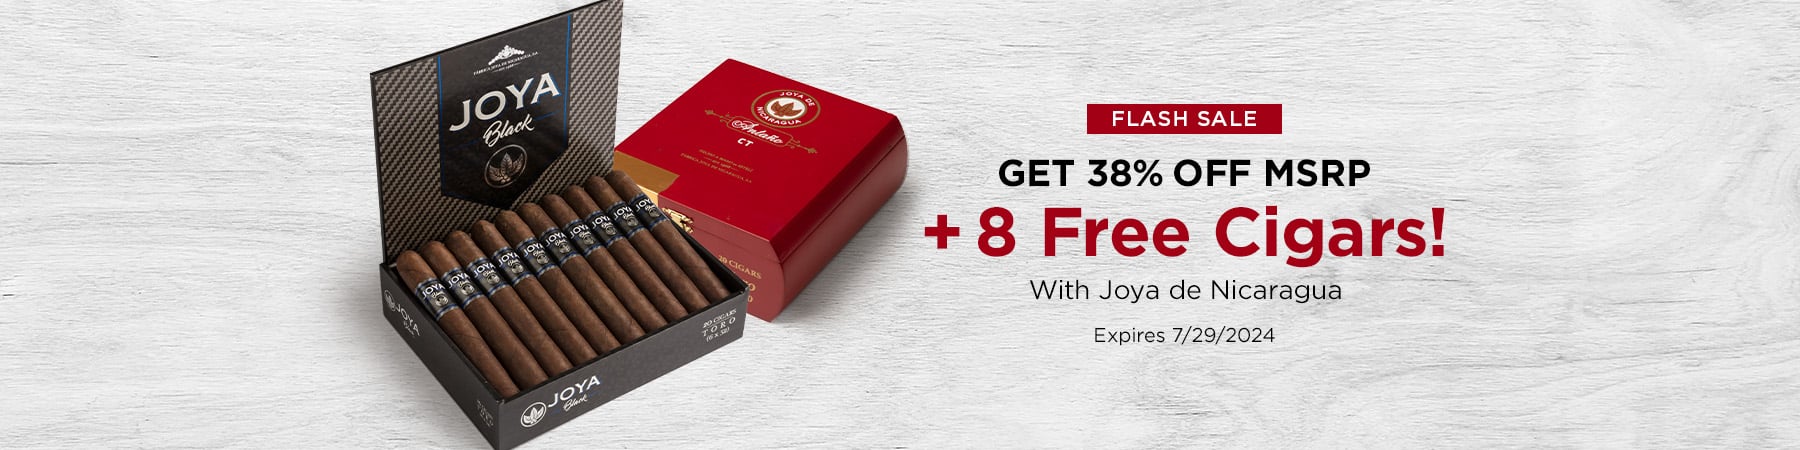 Joya de Nicaragua - 38% Off MSRP + 8 Free Cigars